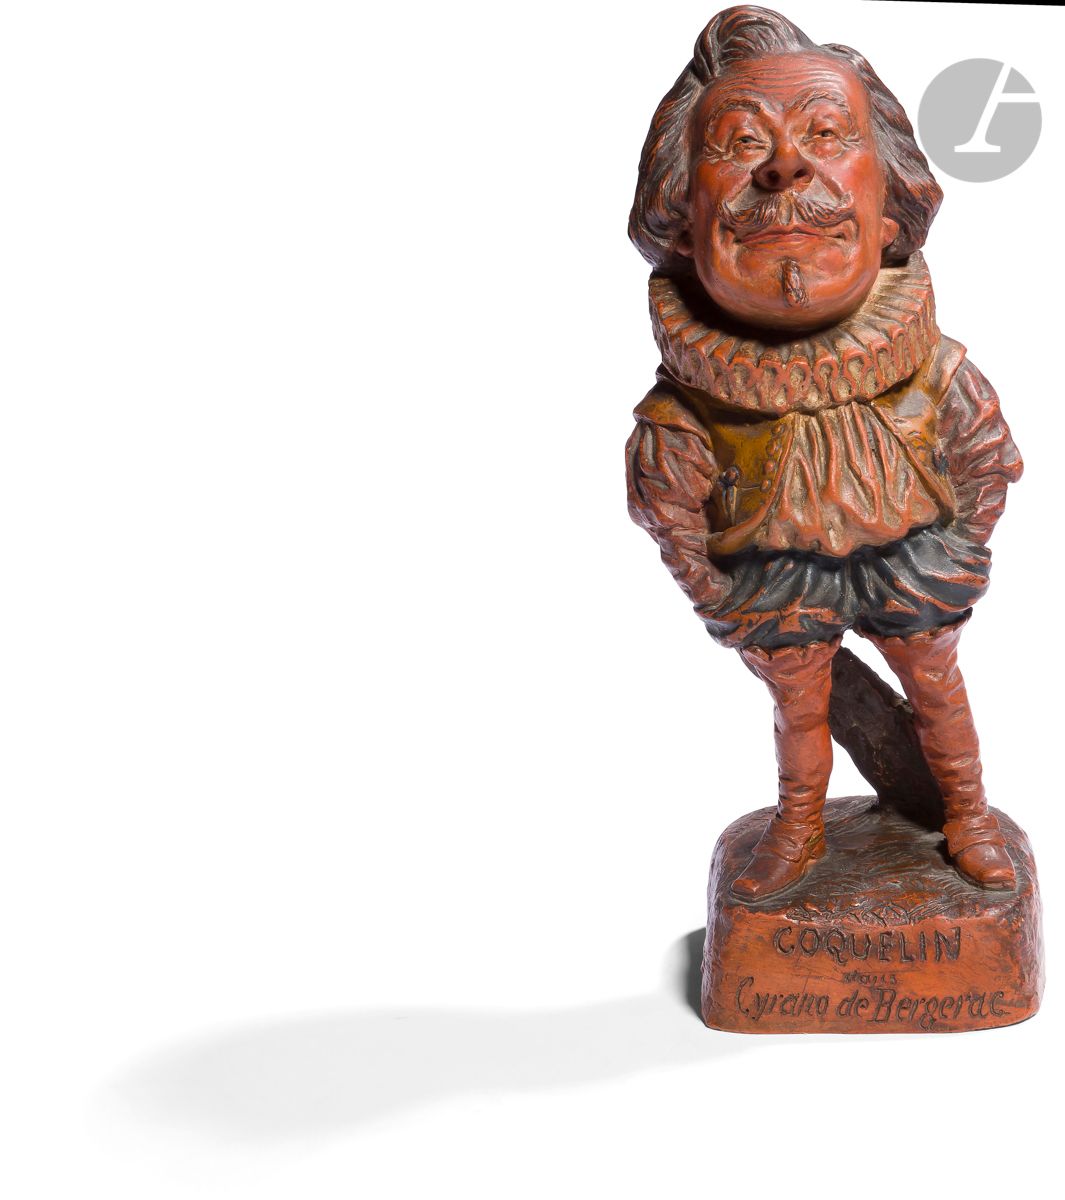 Null 查尔斯-科塔(1869-1942
)康斯坦丁-科奎林饰演西拉诺-德-贝尔热拉克
多色赤土雕塑。
底部有标题和签名高
：22

厘米类似

证明

：
&hellip;